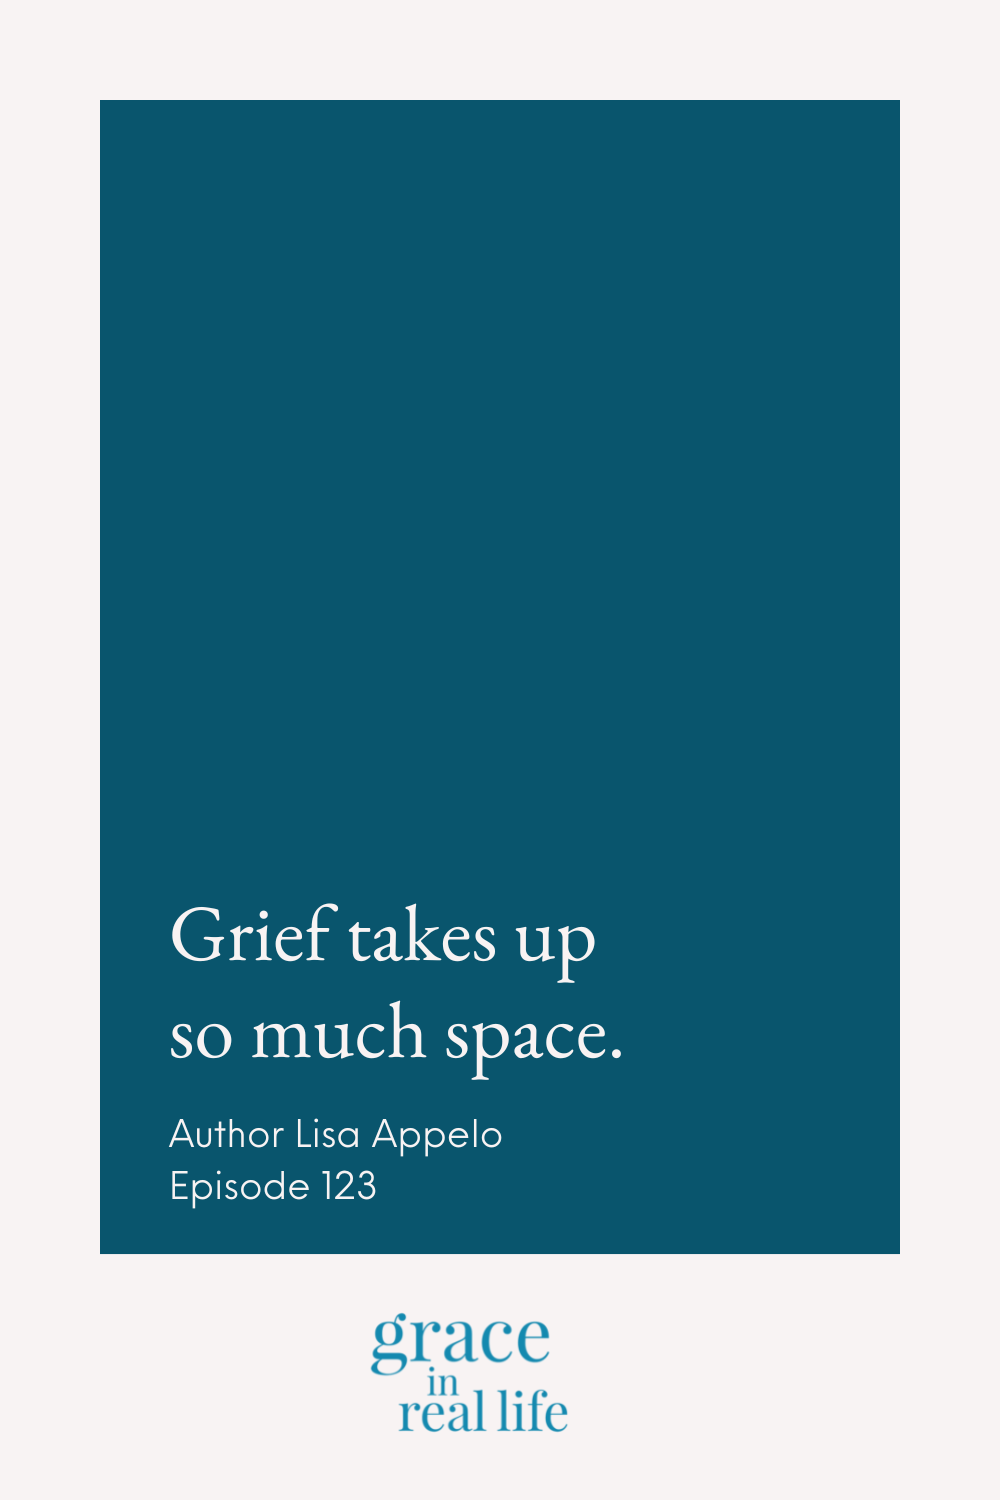 Pin H. Ep.123. God, grace, emotions, grief, Lisa Appelo